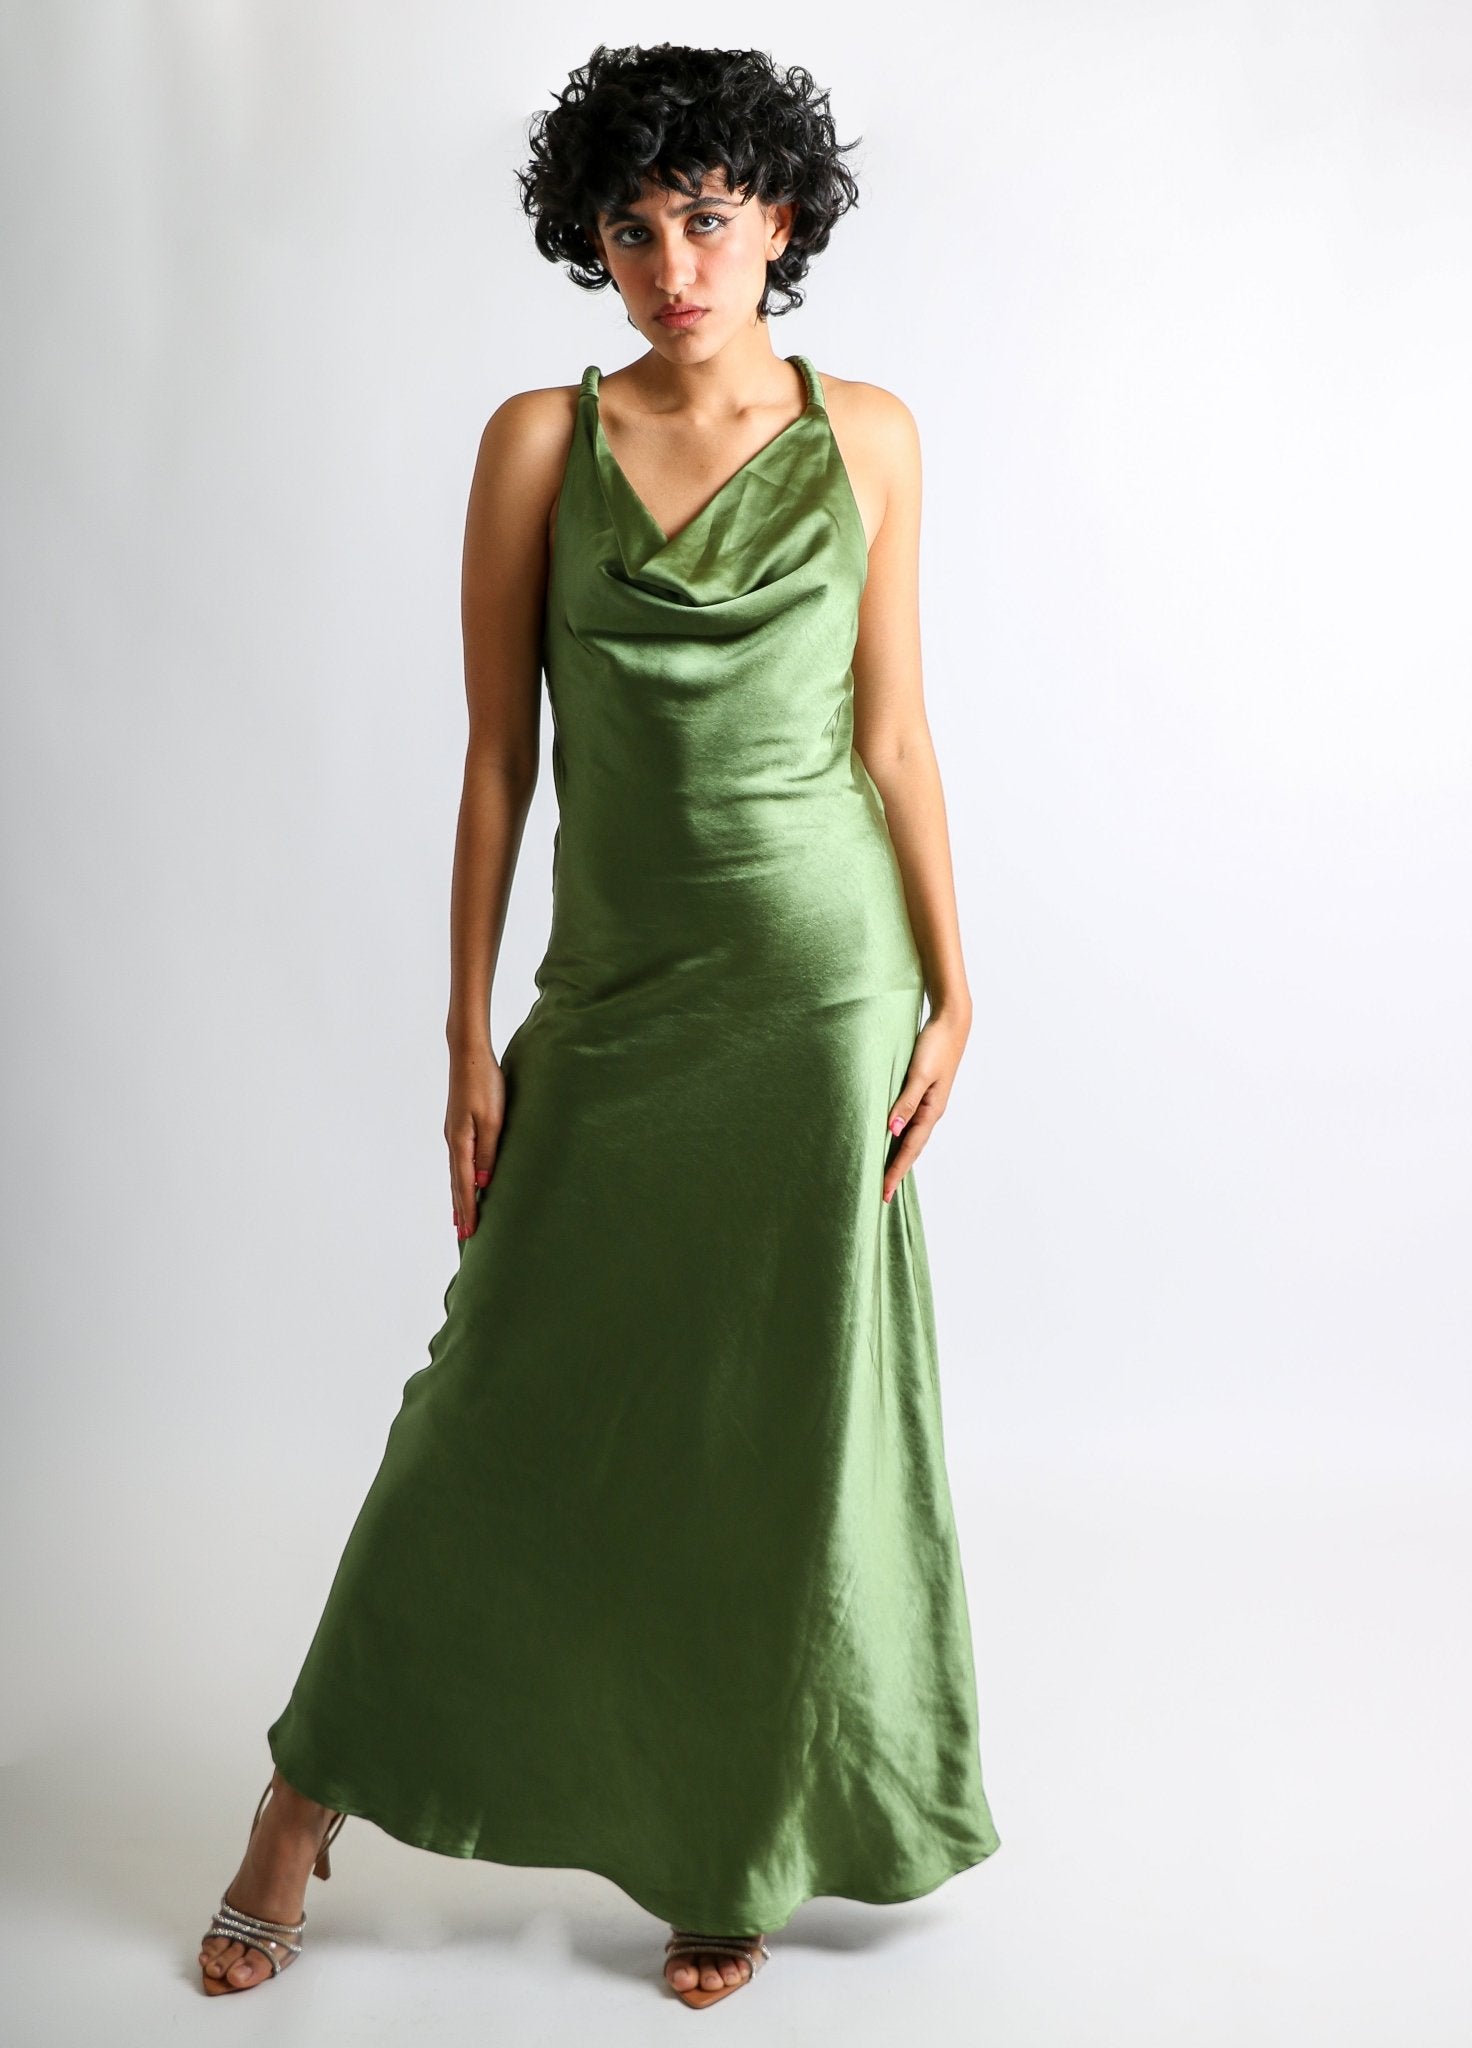 Saida - verde - Cindel vestidos maxi, midi, mini, para toda ocasion, largos, de fiesta, de boda